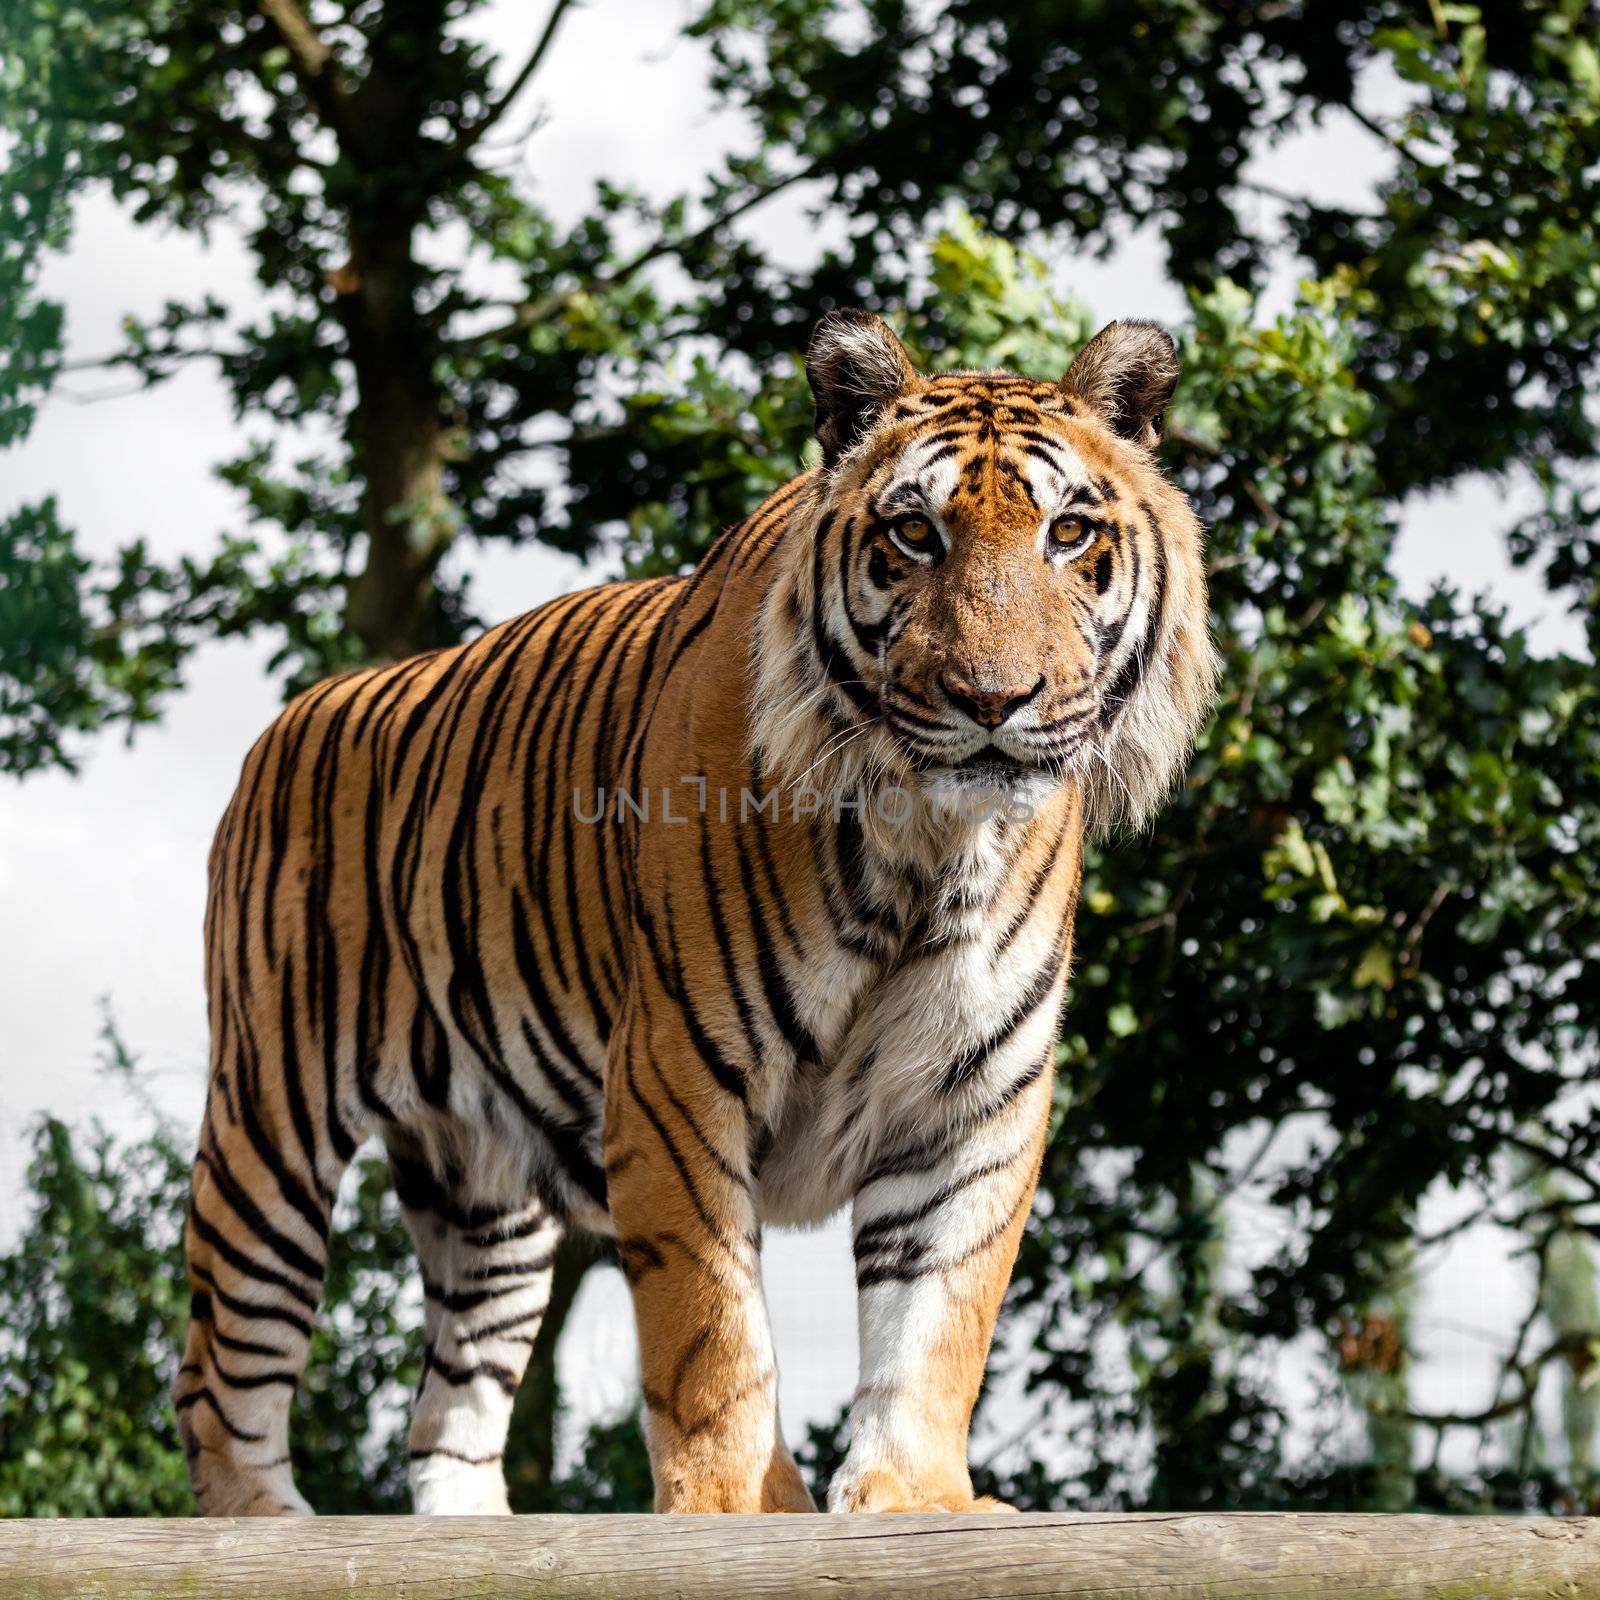 Mature Bengal Tiger Standing on Wooden Platform by scheriton